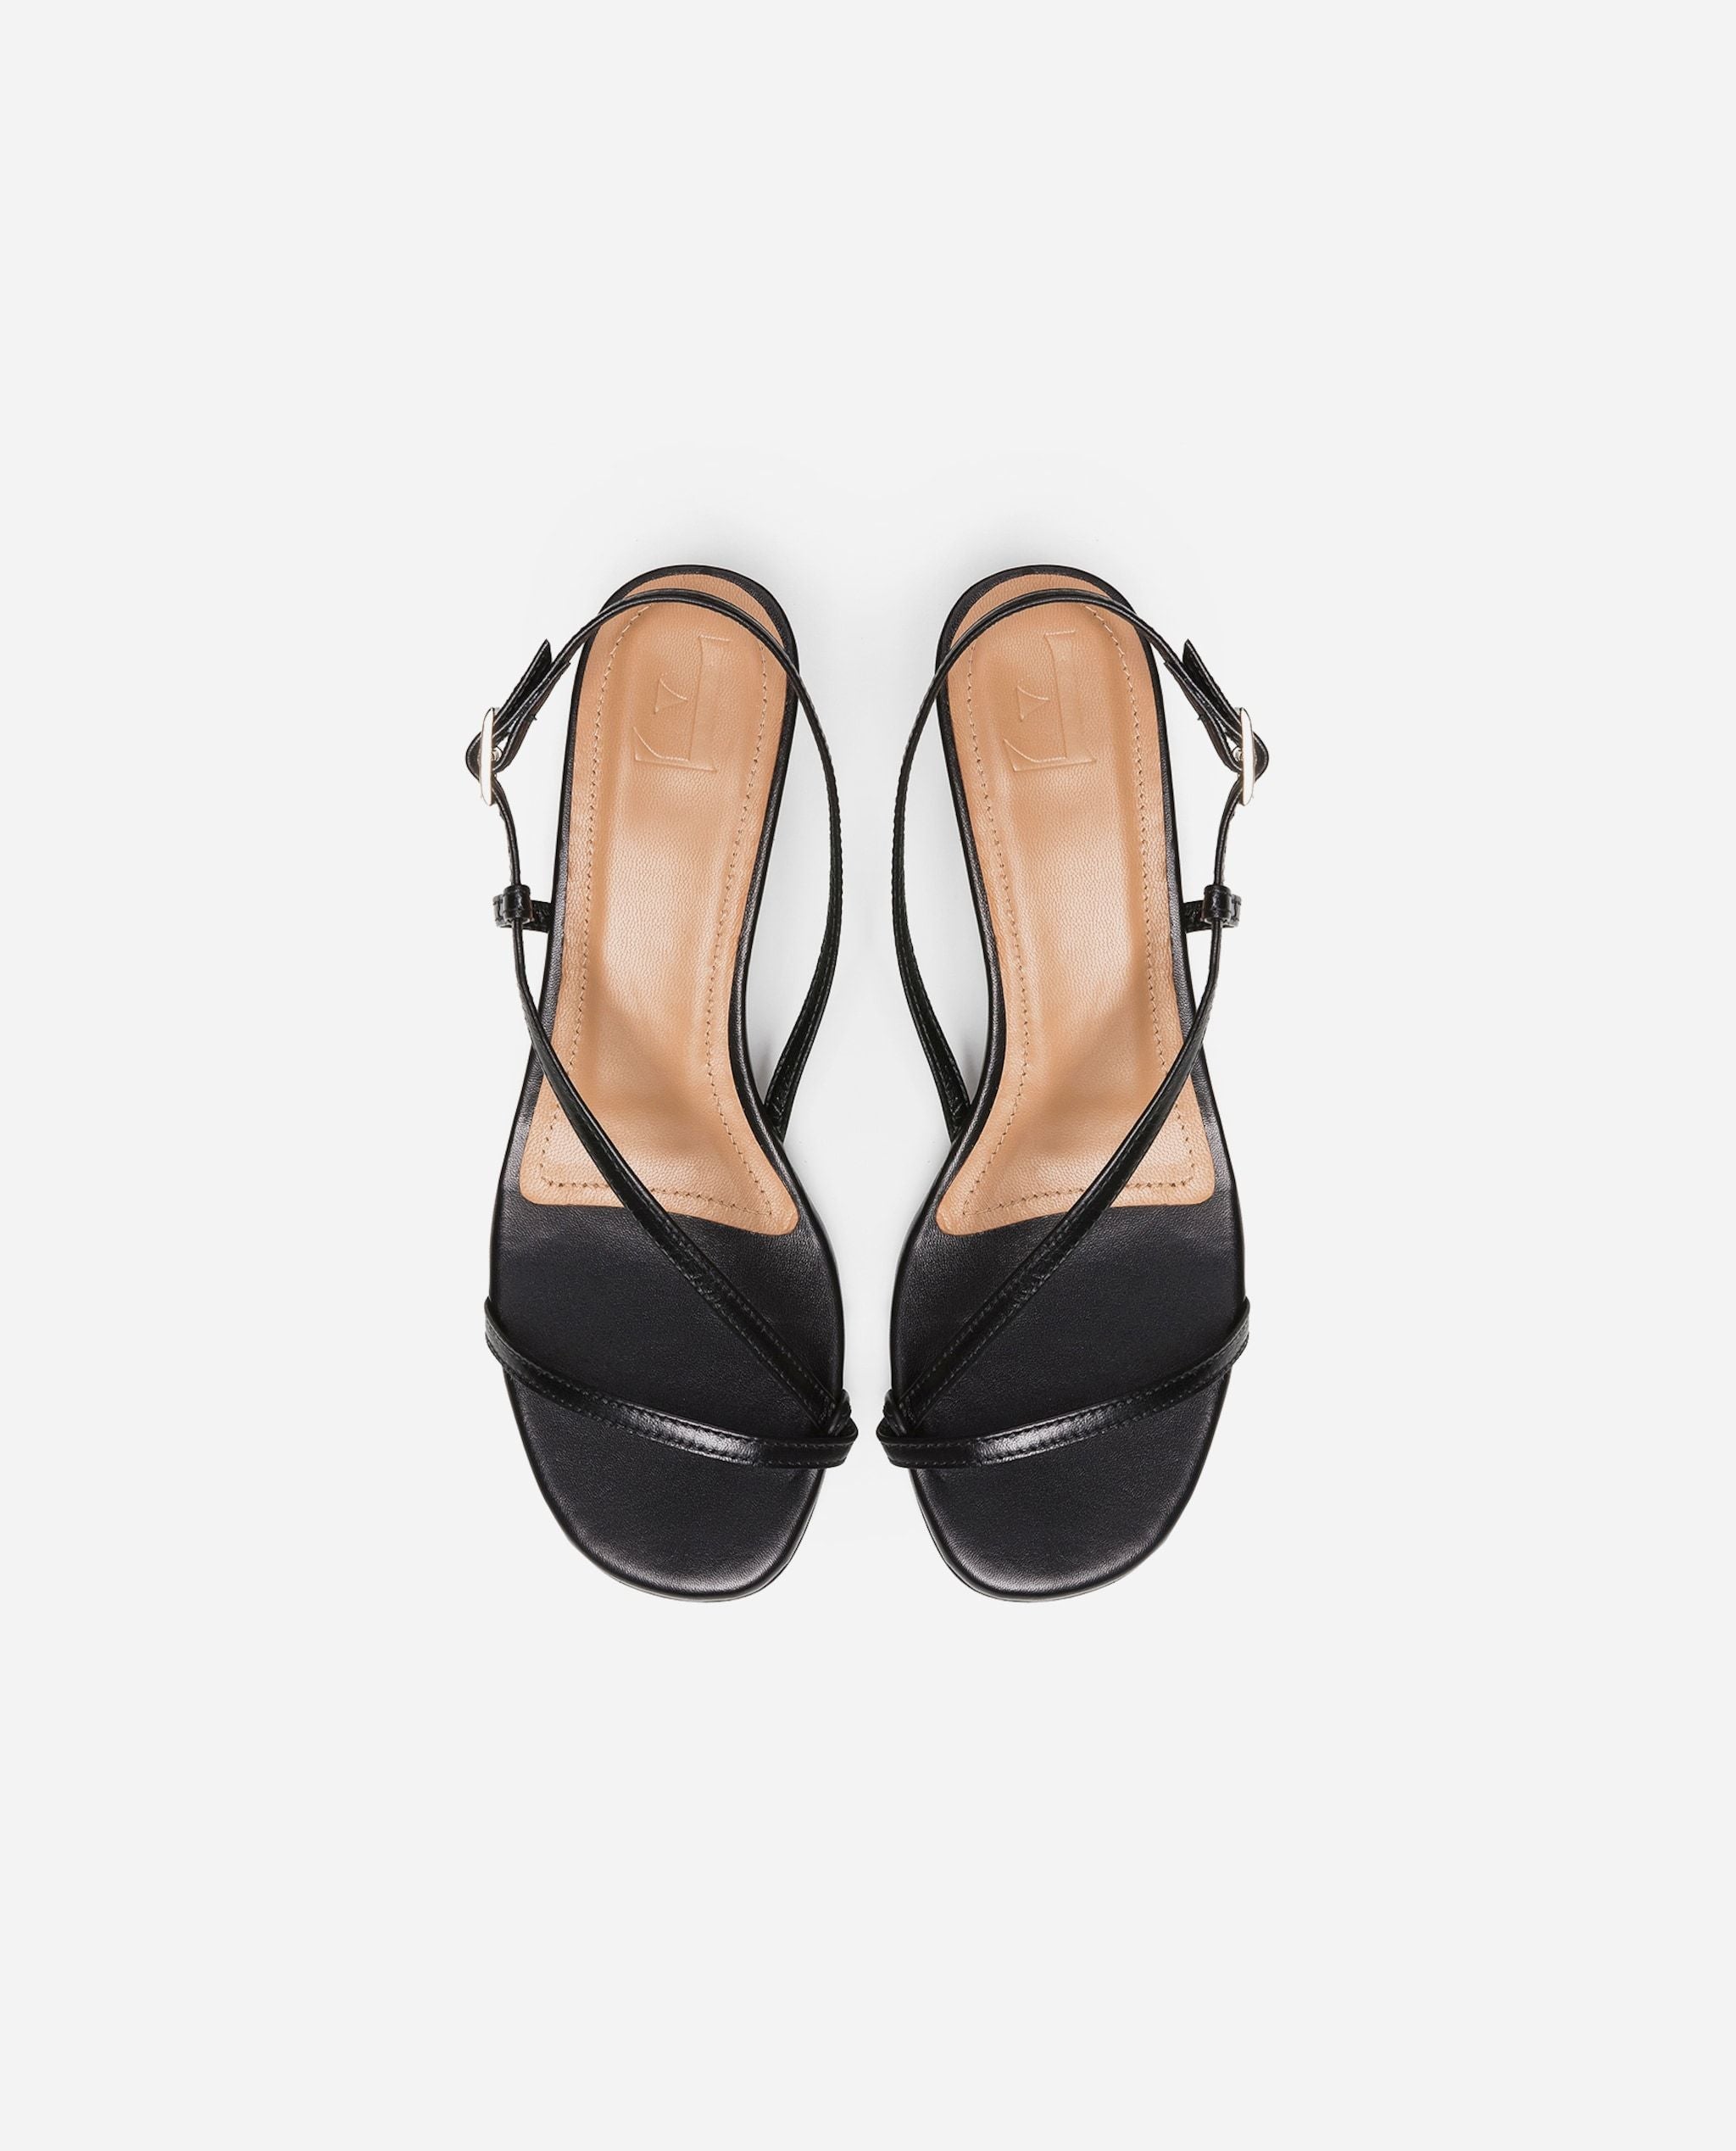 Emma Leather Black Heeled Sandals 20010411501-001 - 3